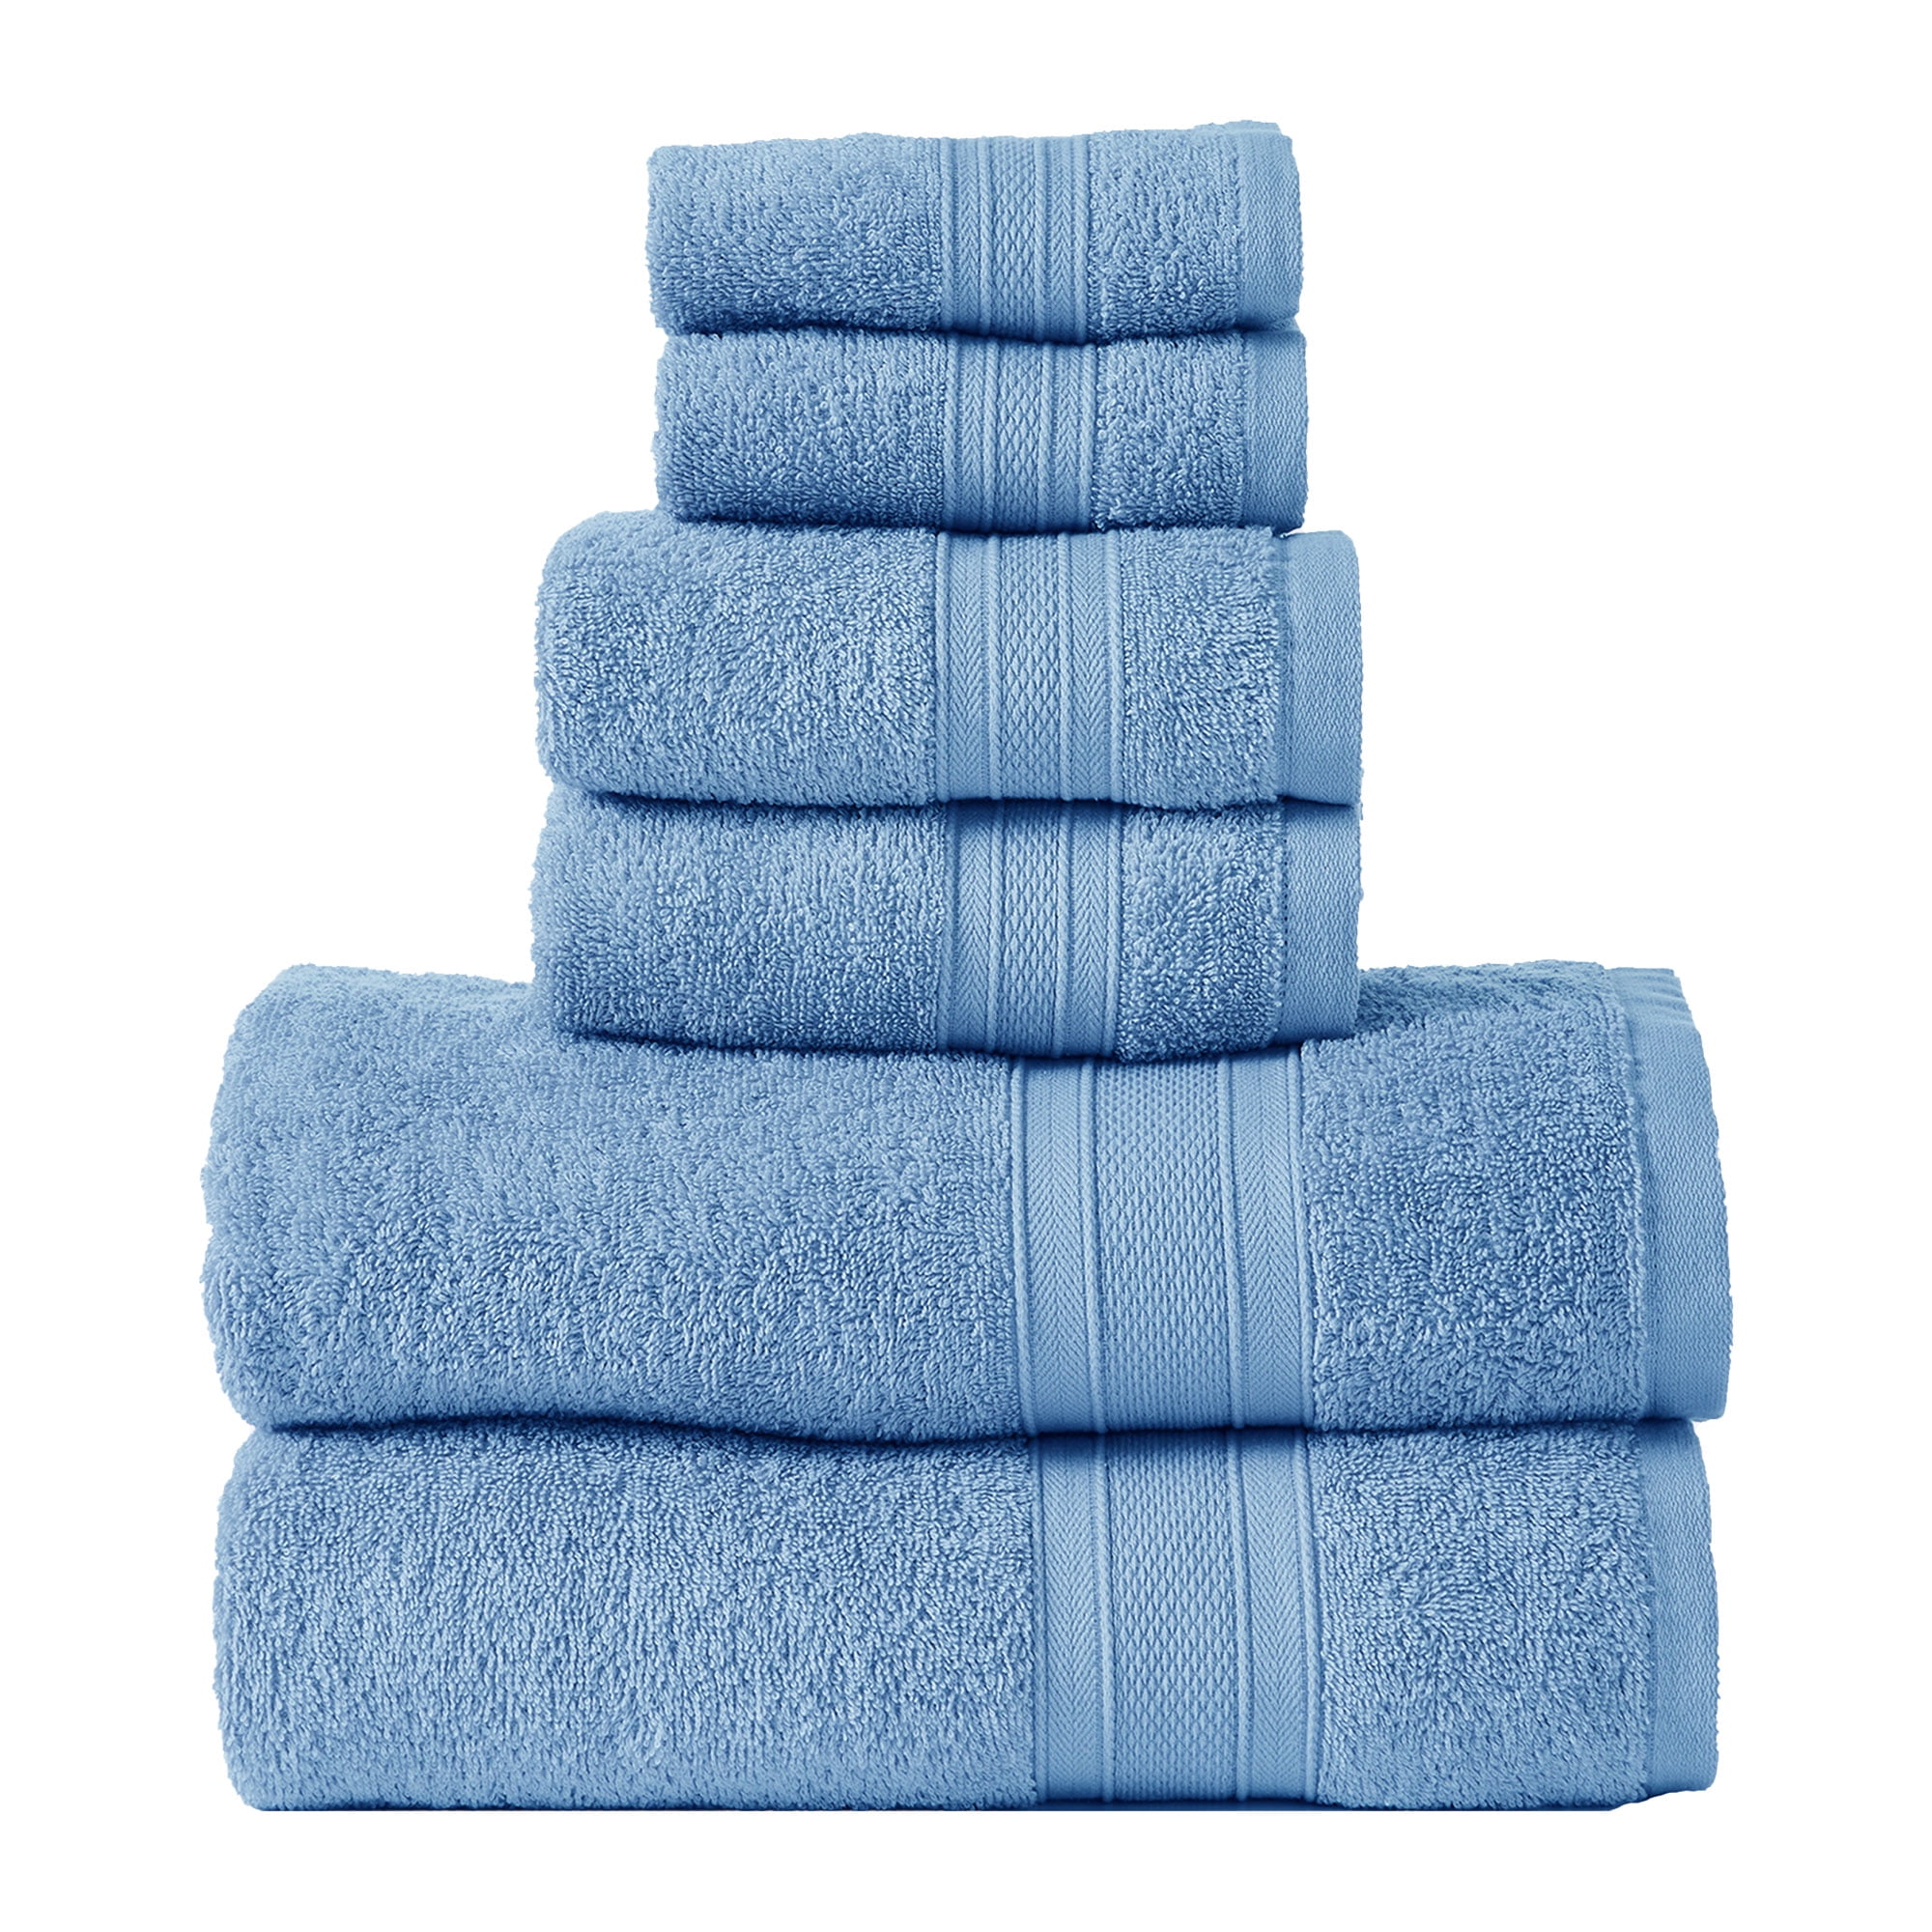 Household Solid Color Men Soft Towel Cotton Absorbent Large Bath Towel L 